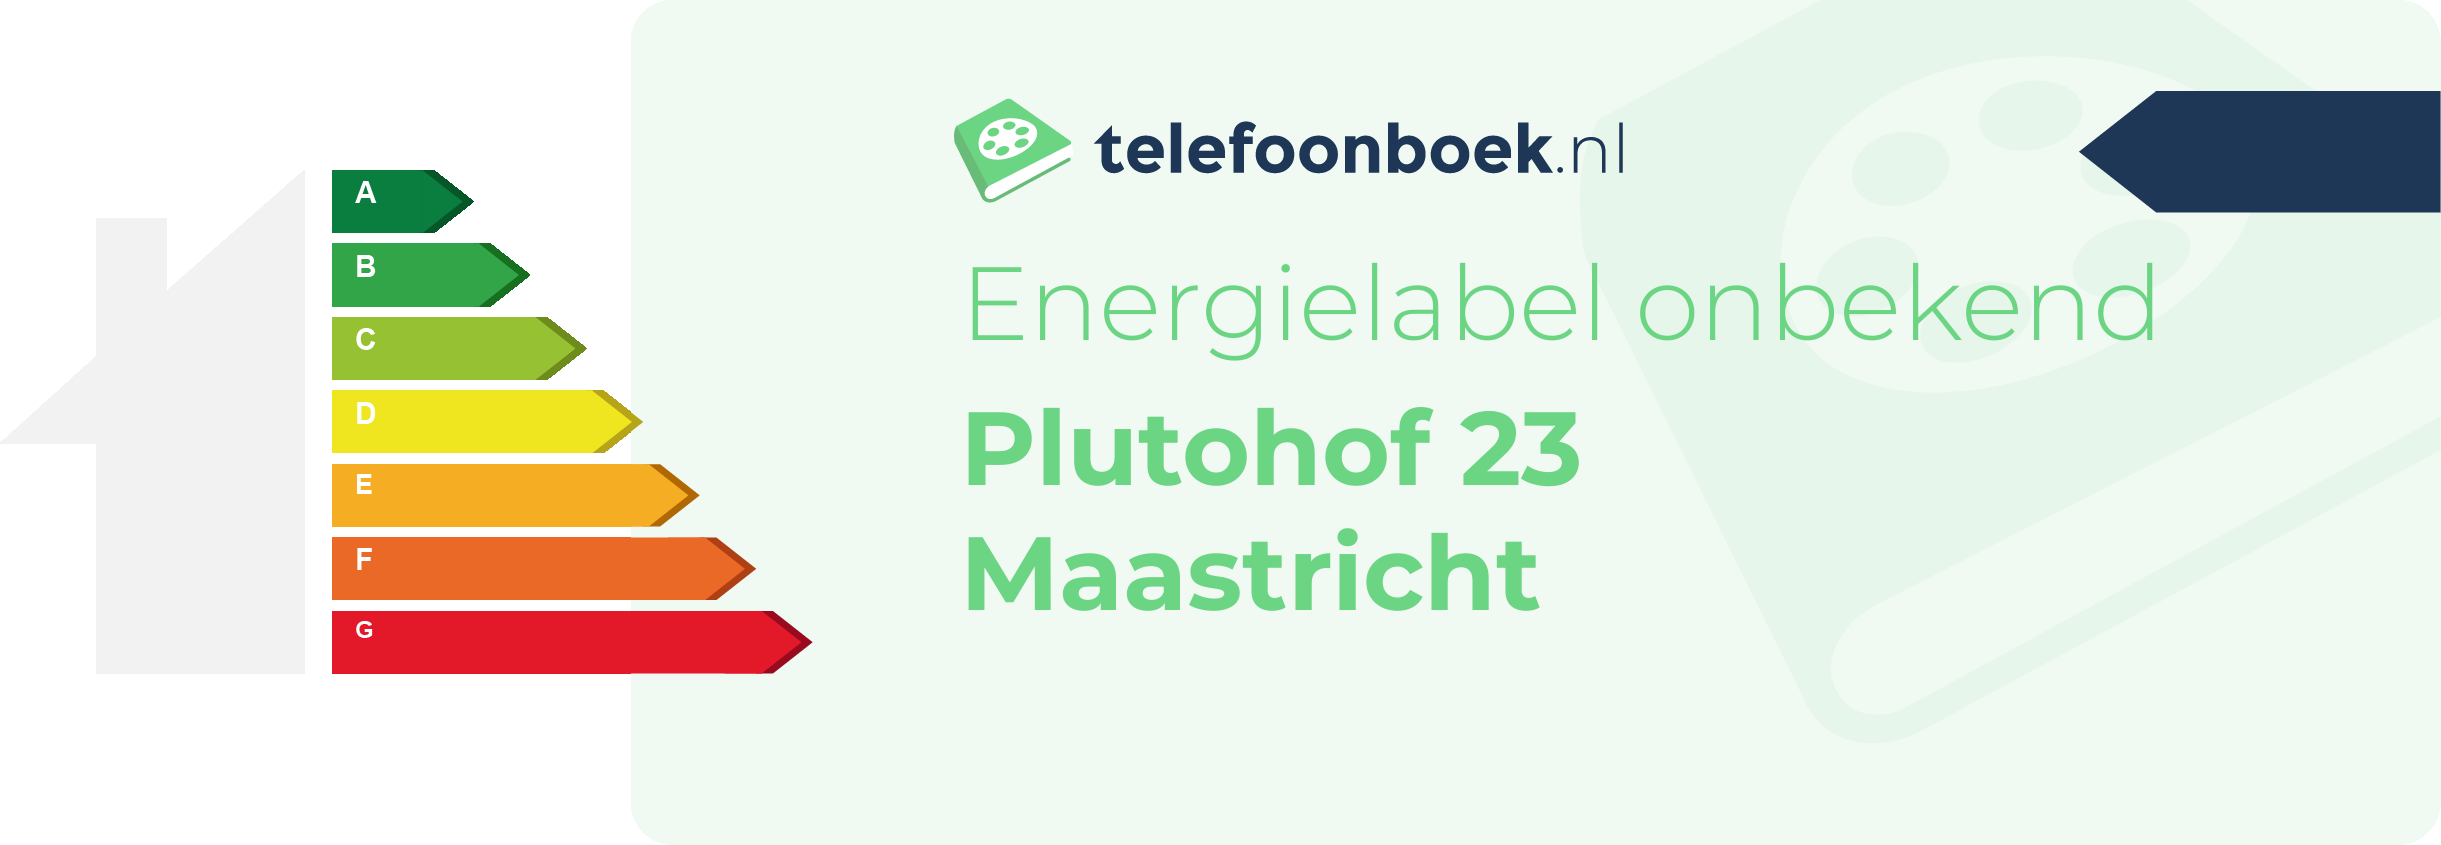 Energielabel Plutohof 23 Maastricht